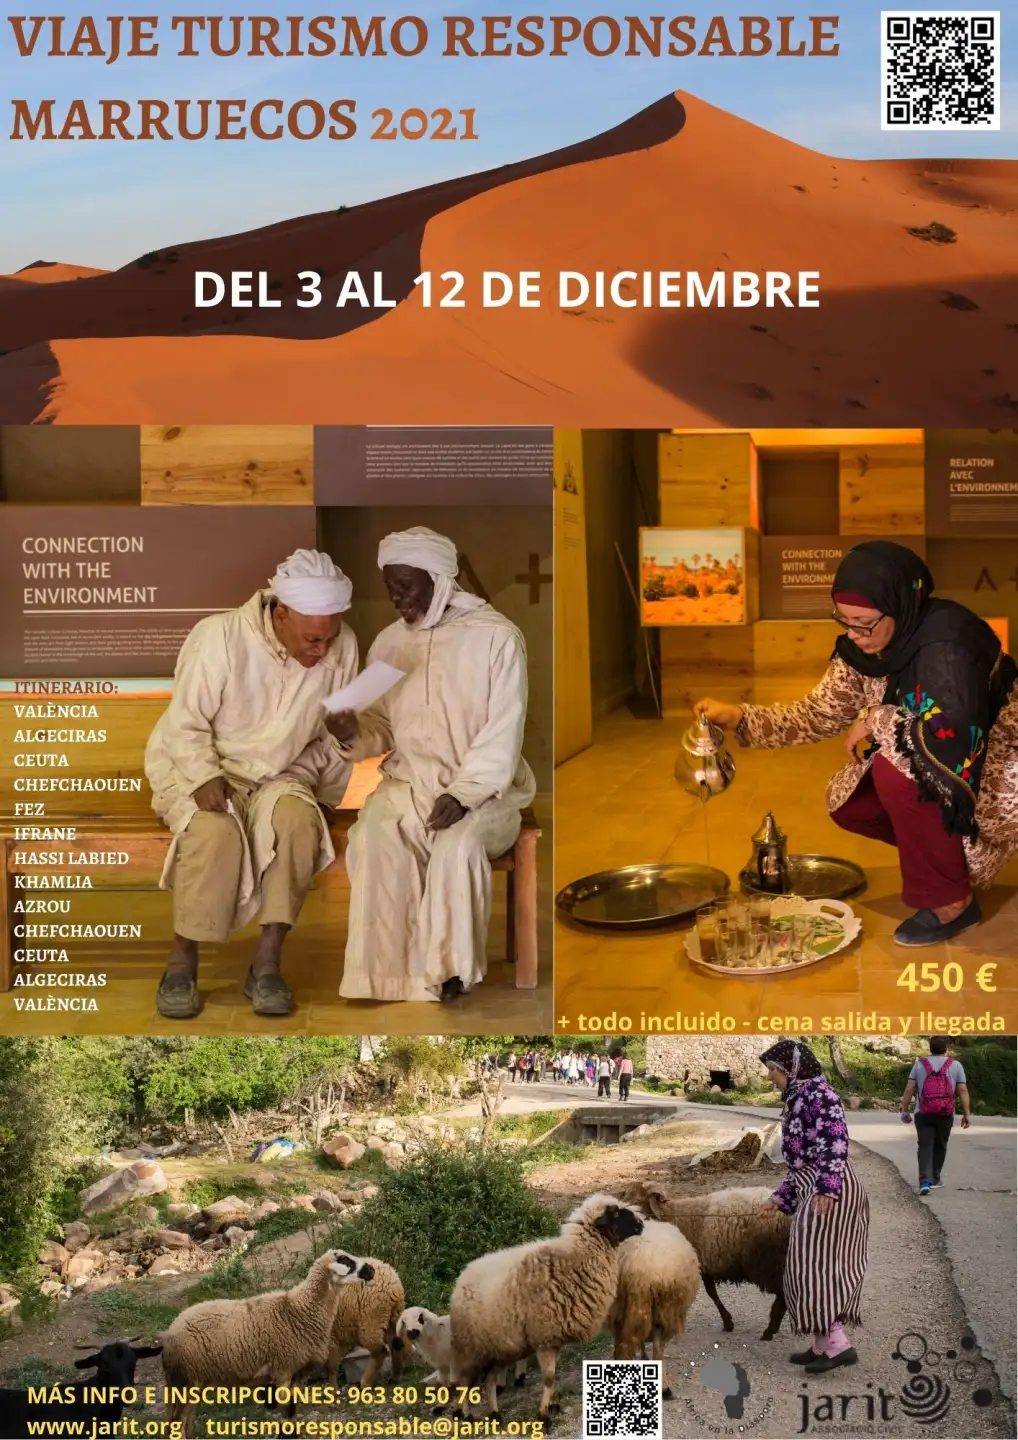 Viaje a Marruecos del 15 al 25 de abril 2022 | Turismo responsable